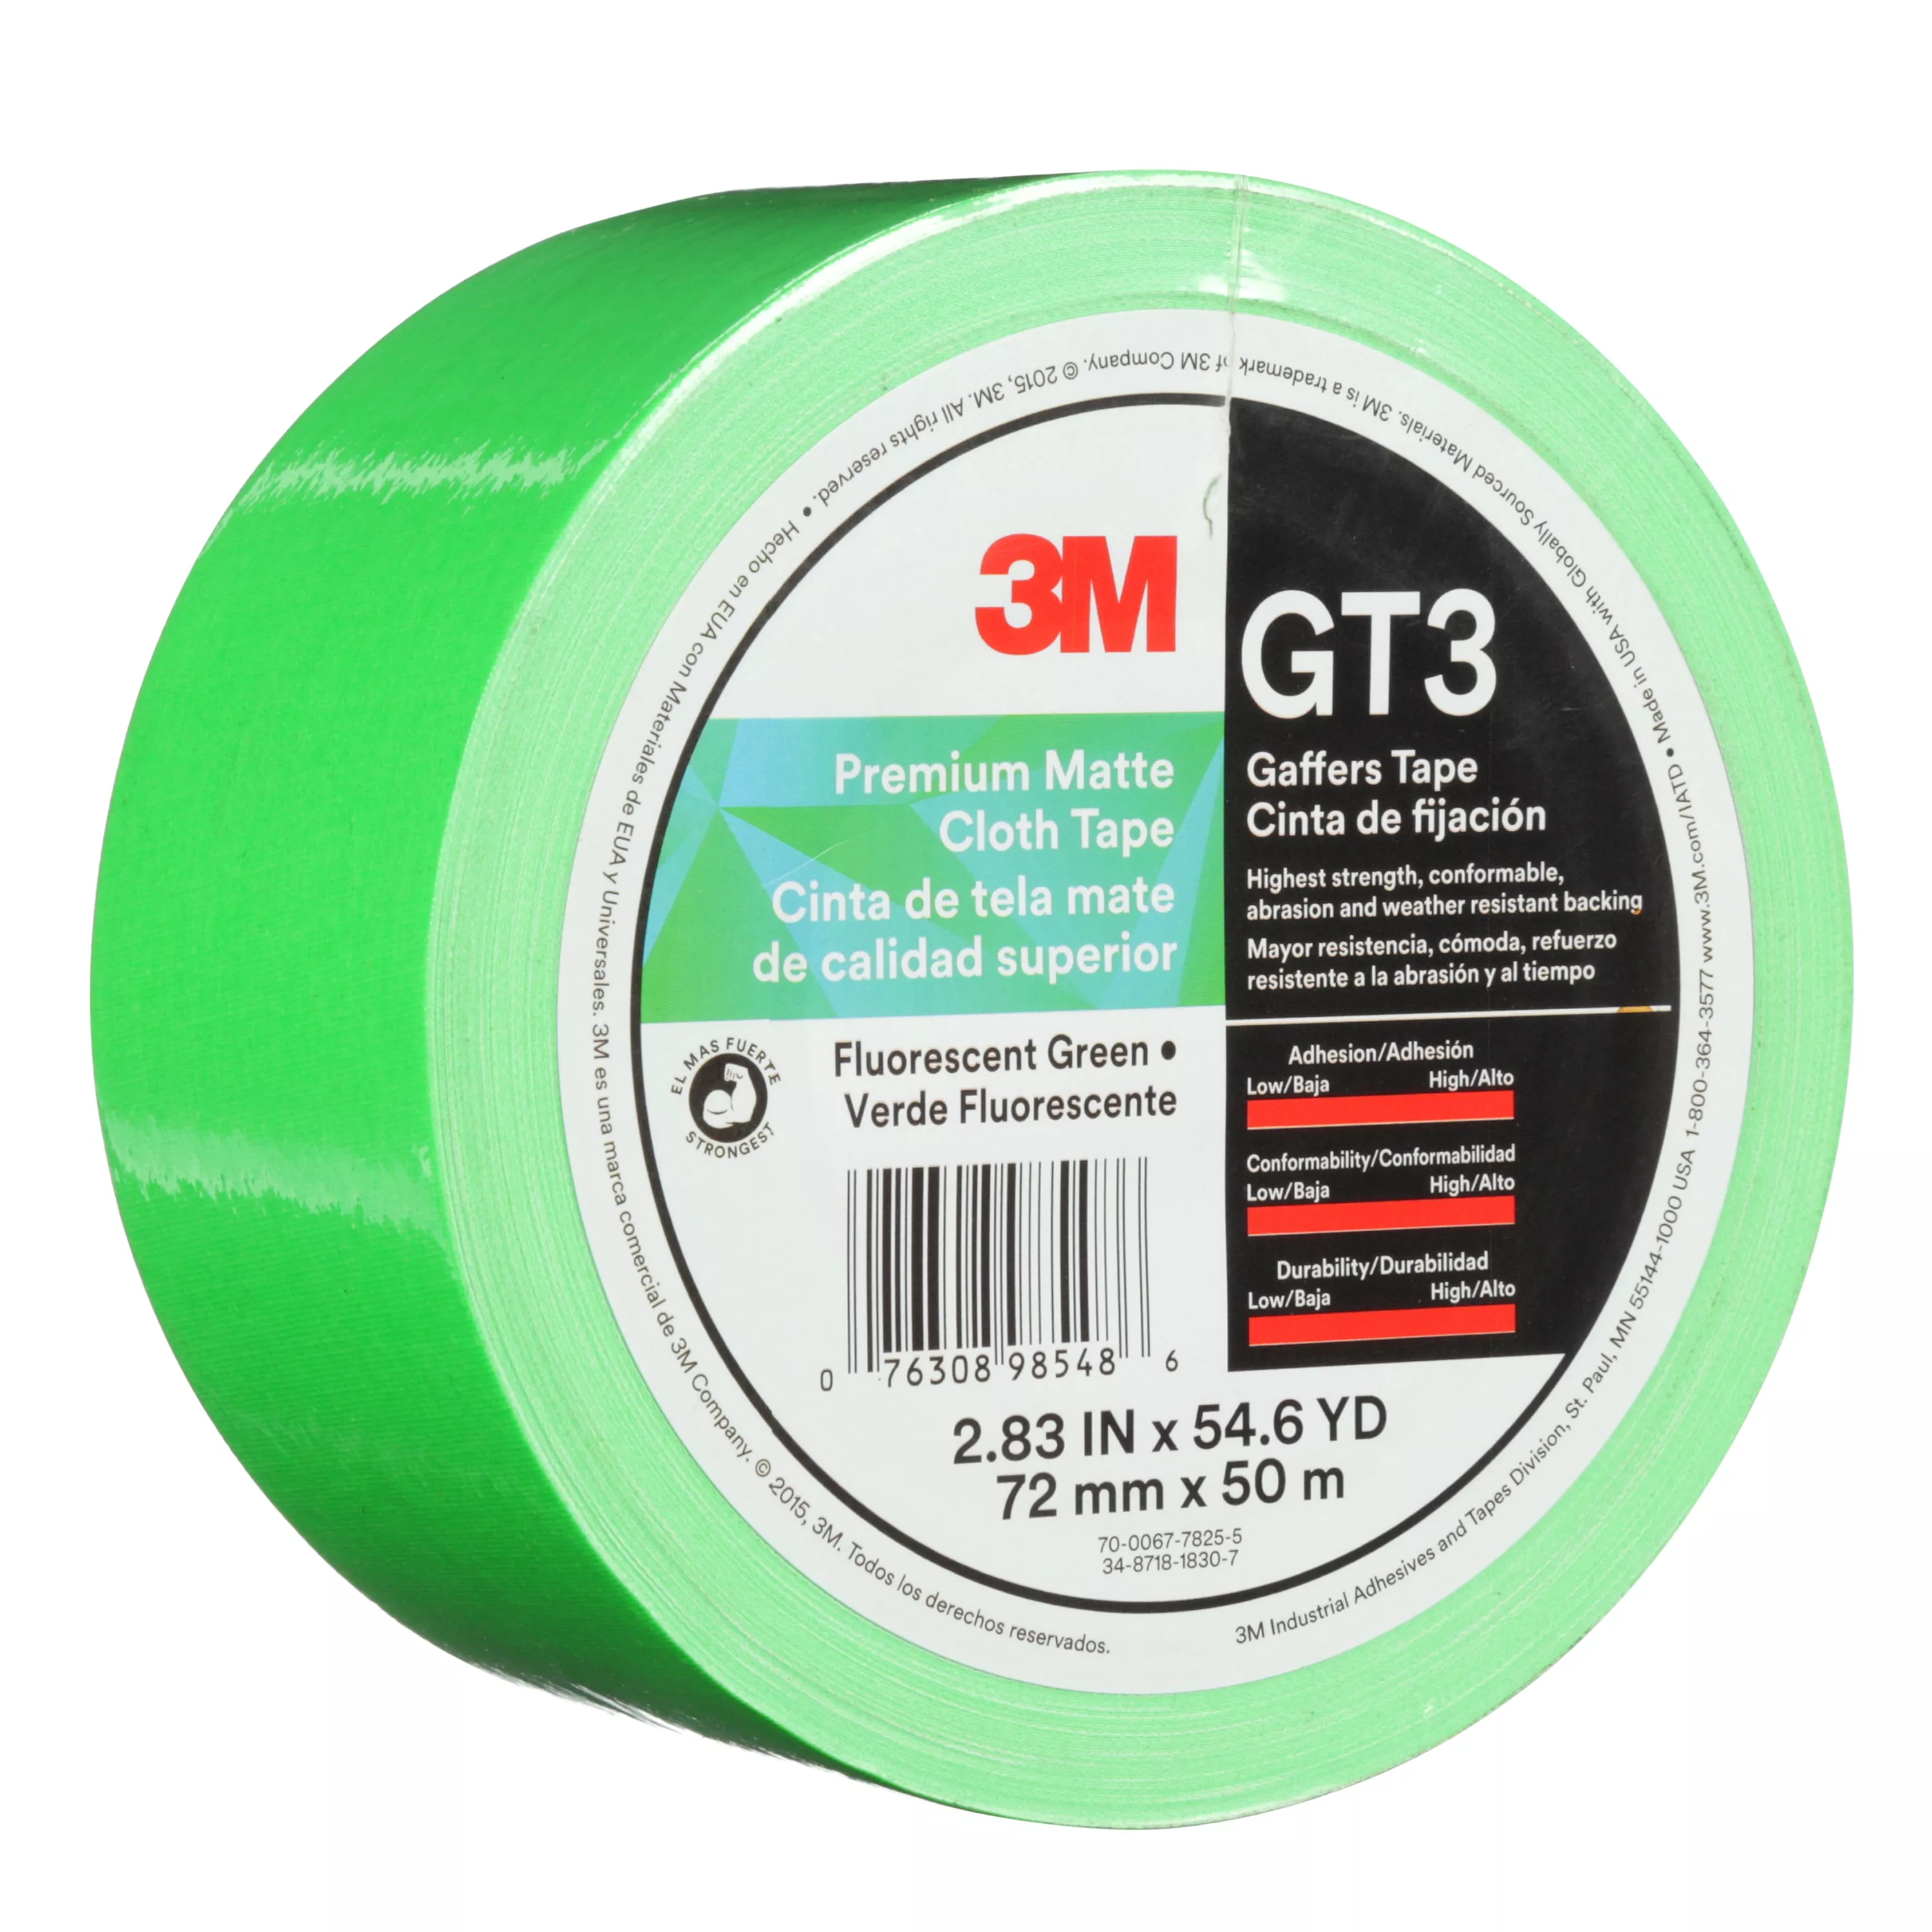 3M™ Premium Matte Cloth (Gaffers) Tape GT3, Fluorescent Green, 72 mm x
50 m, 11 mil, 16/Case